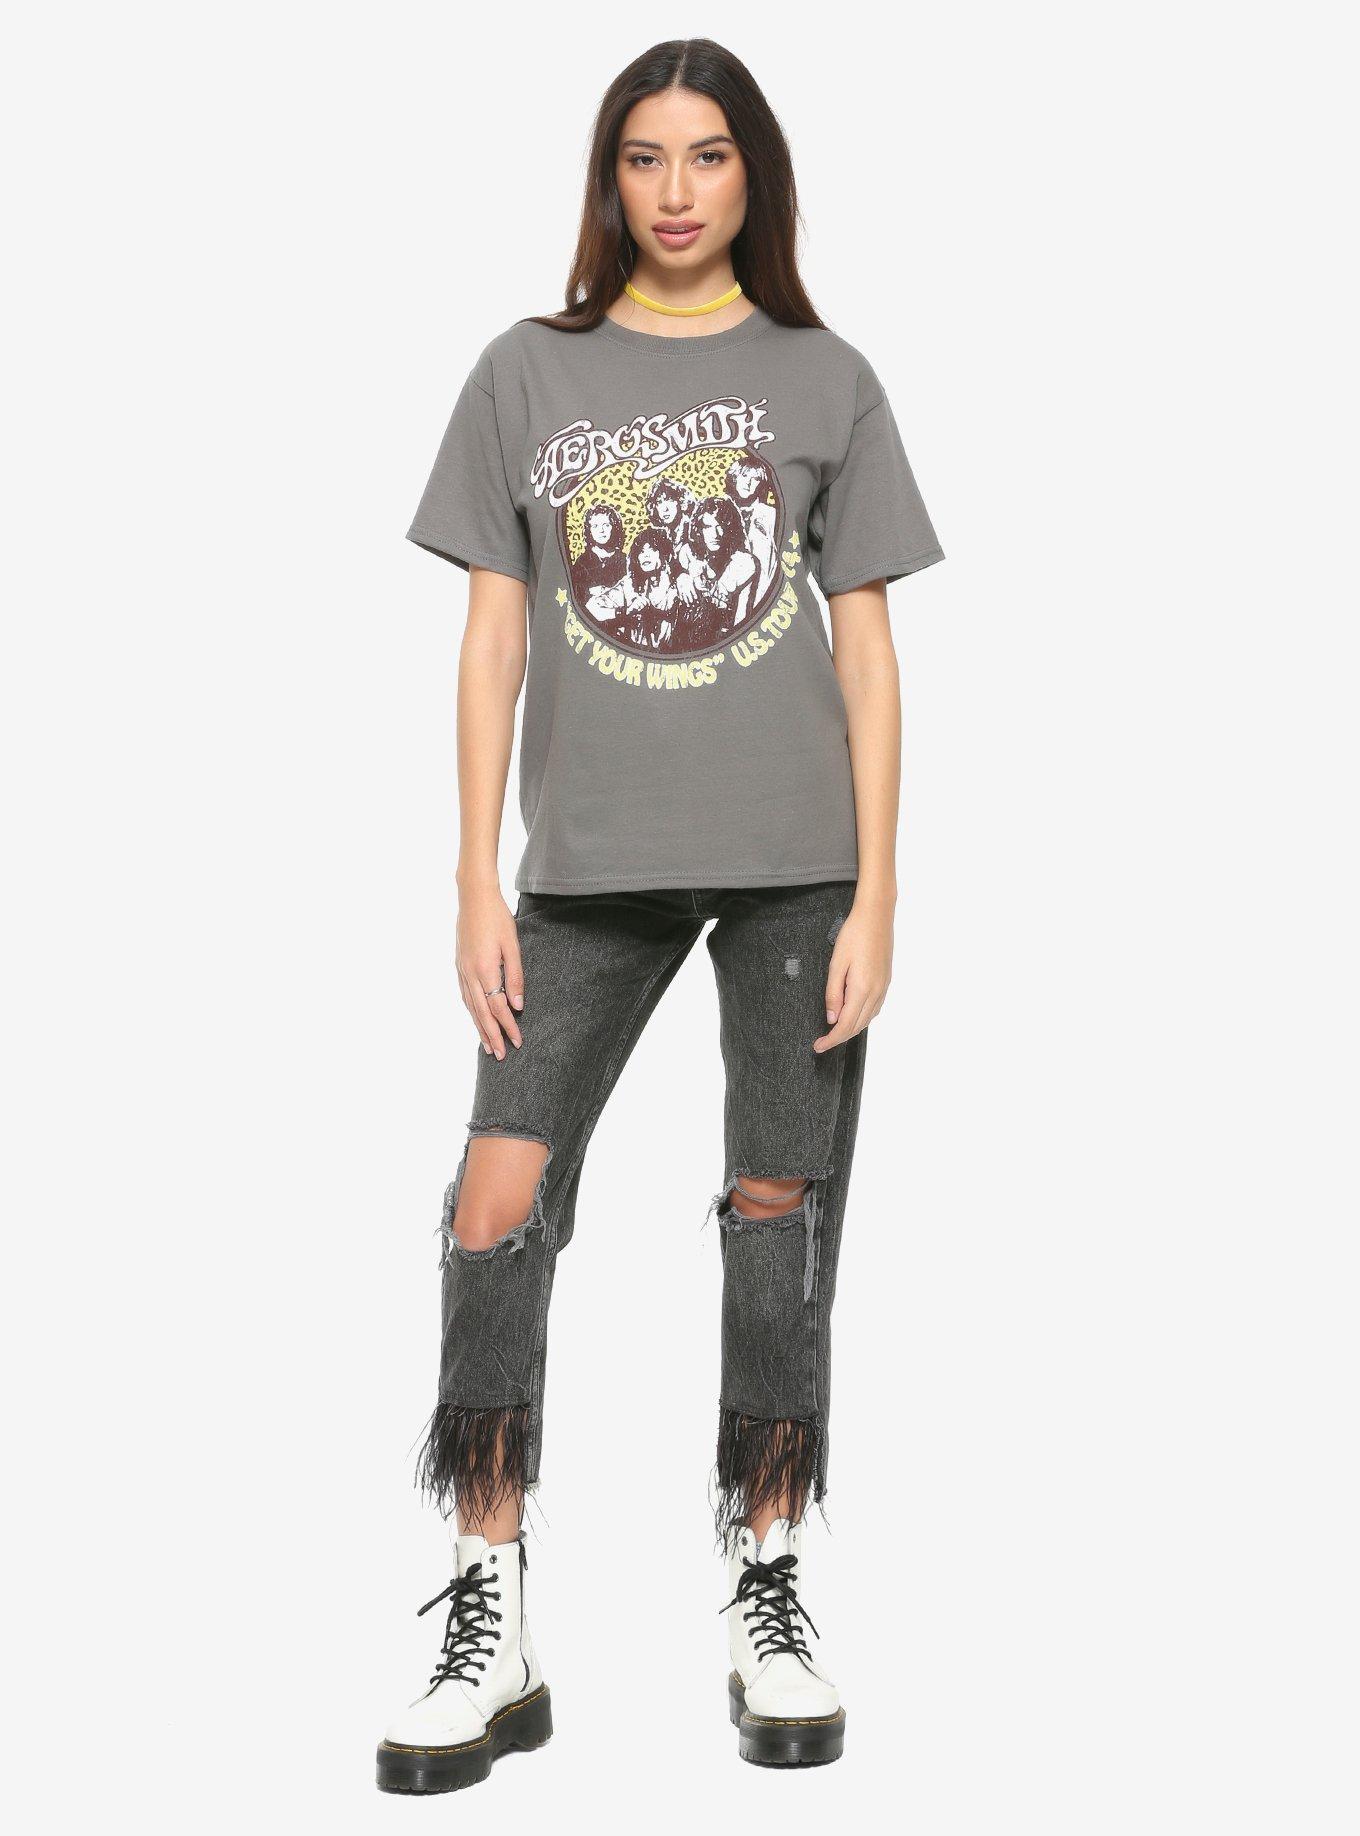 Aerosmith Leopard Print Logo Girls T-Shirt, GREY, alternate